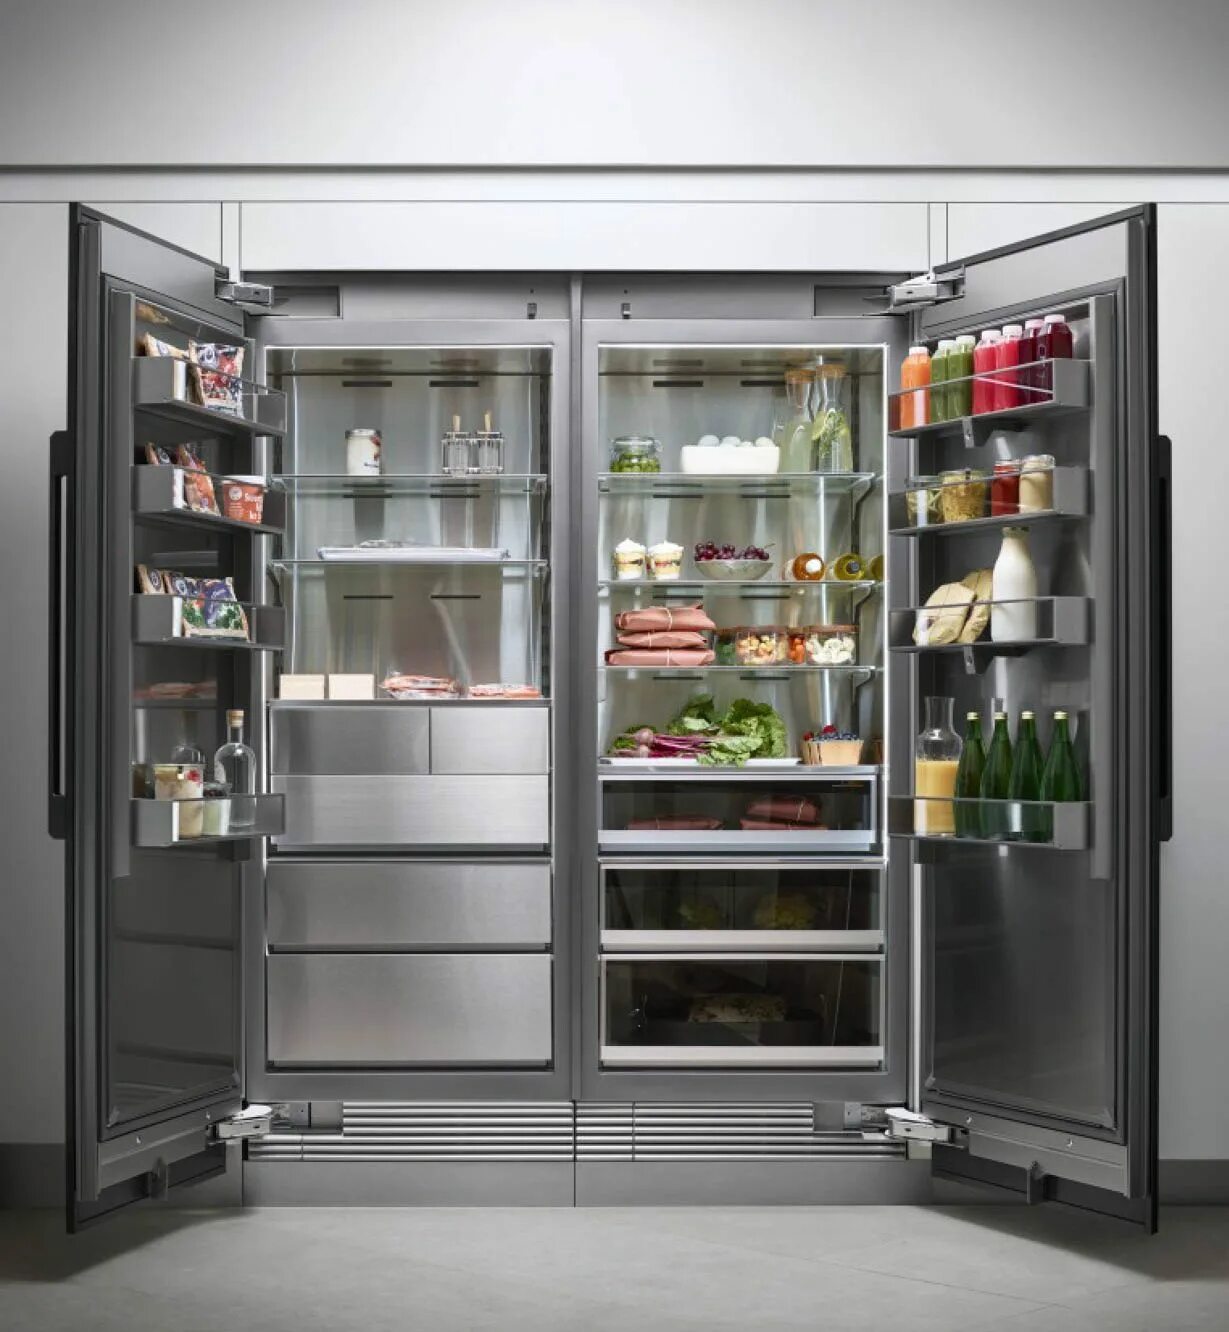 Холодильник Northland Refrigerator 60 SS.. Двухстворчатый холодильник Miele. Холодильник Samsung rs66n8100s9. Дорогой холодильник. Какой холодильник лучше отзывы покупателей